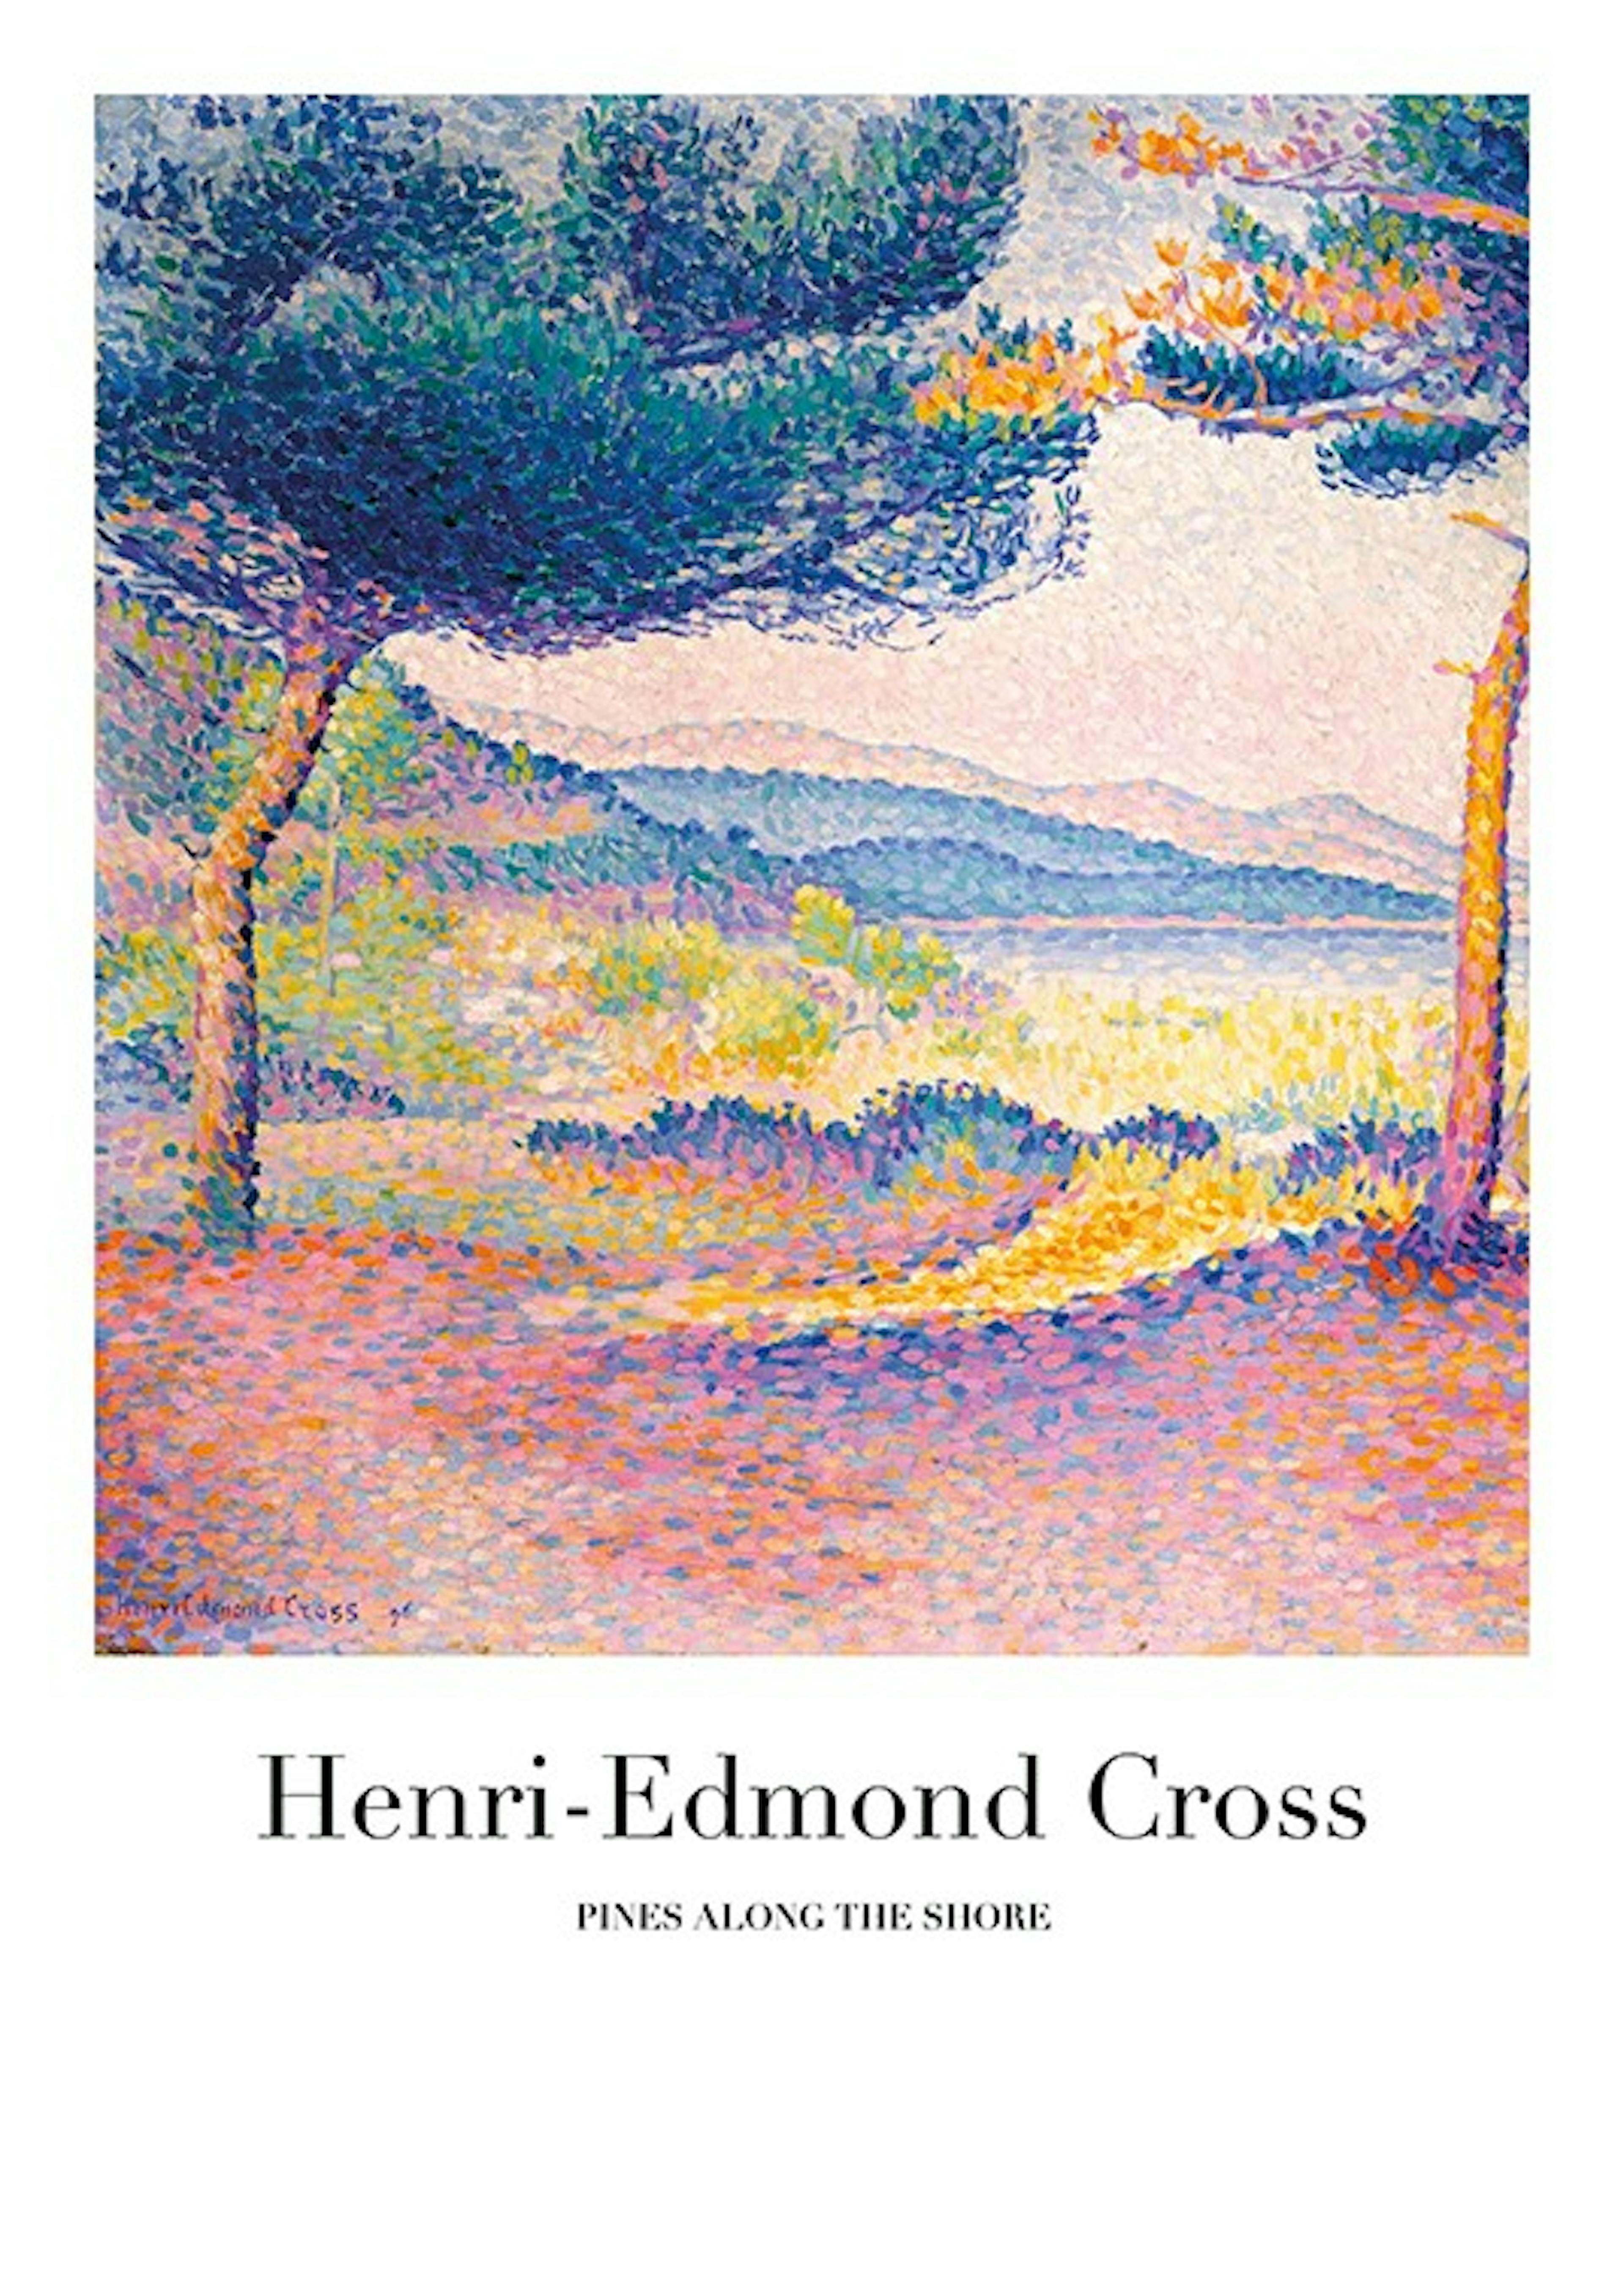 Henri-Edmond Cross - Pines Along the Shore Print